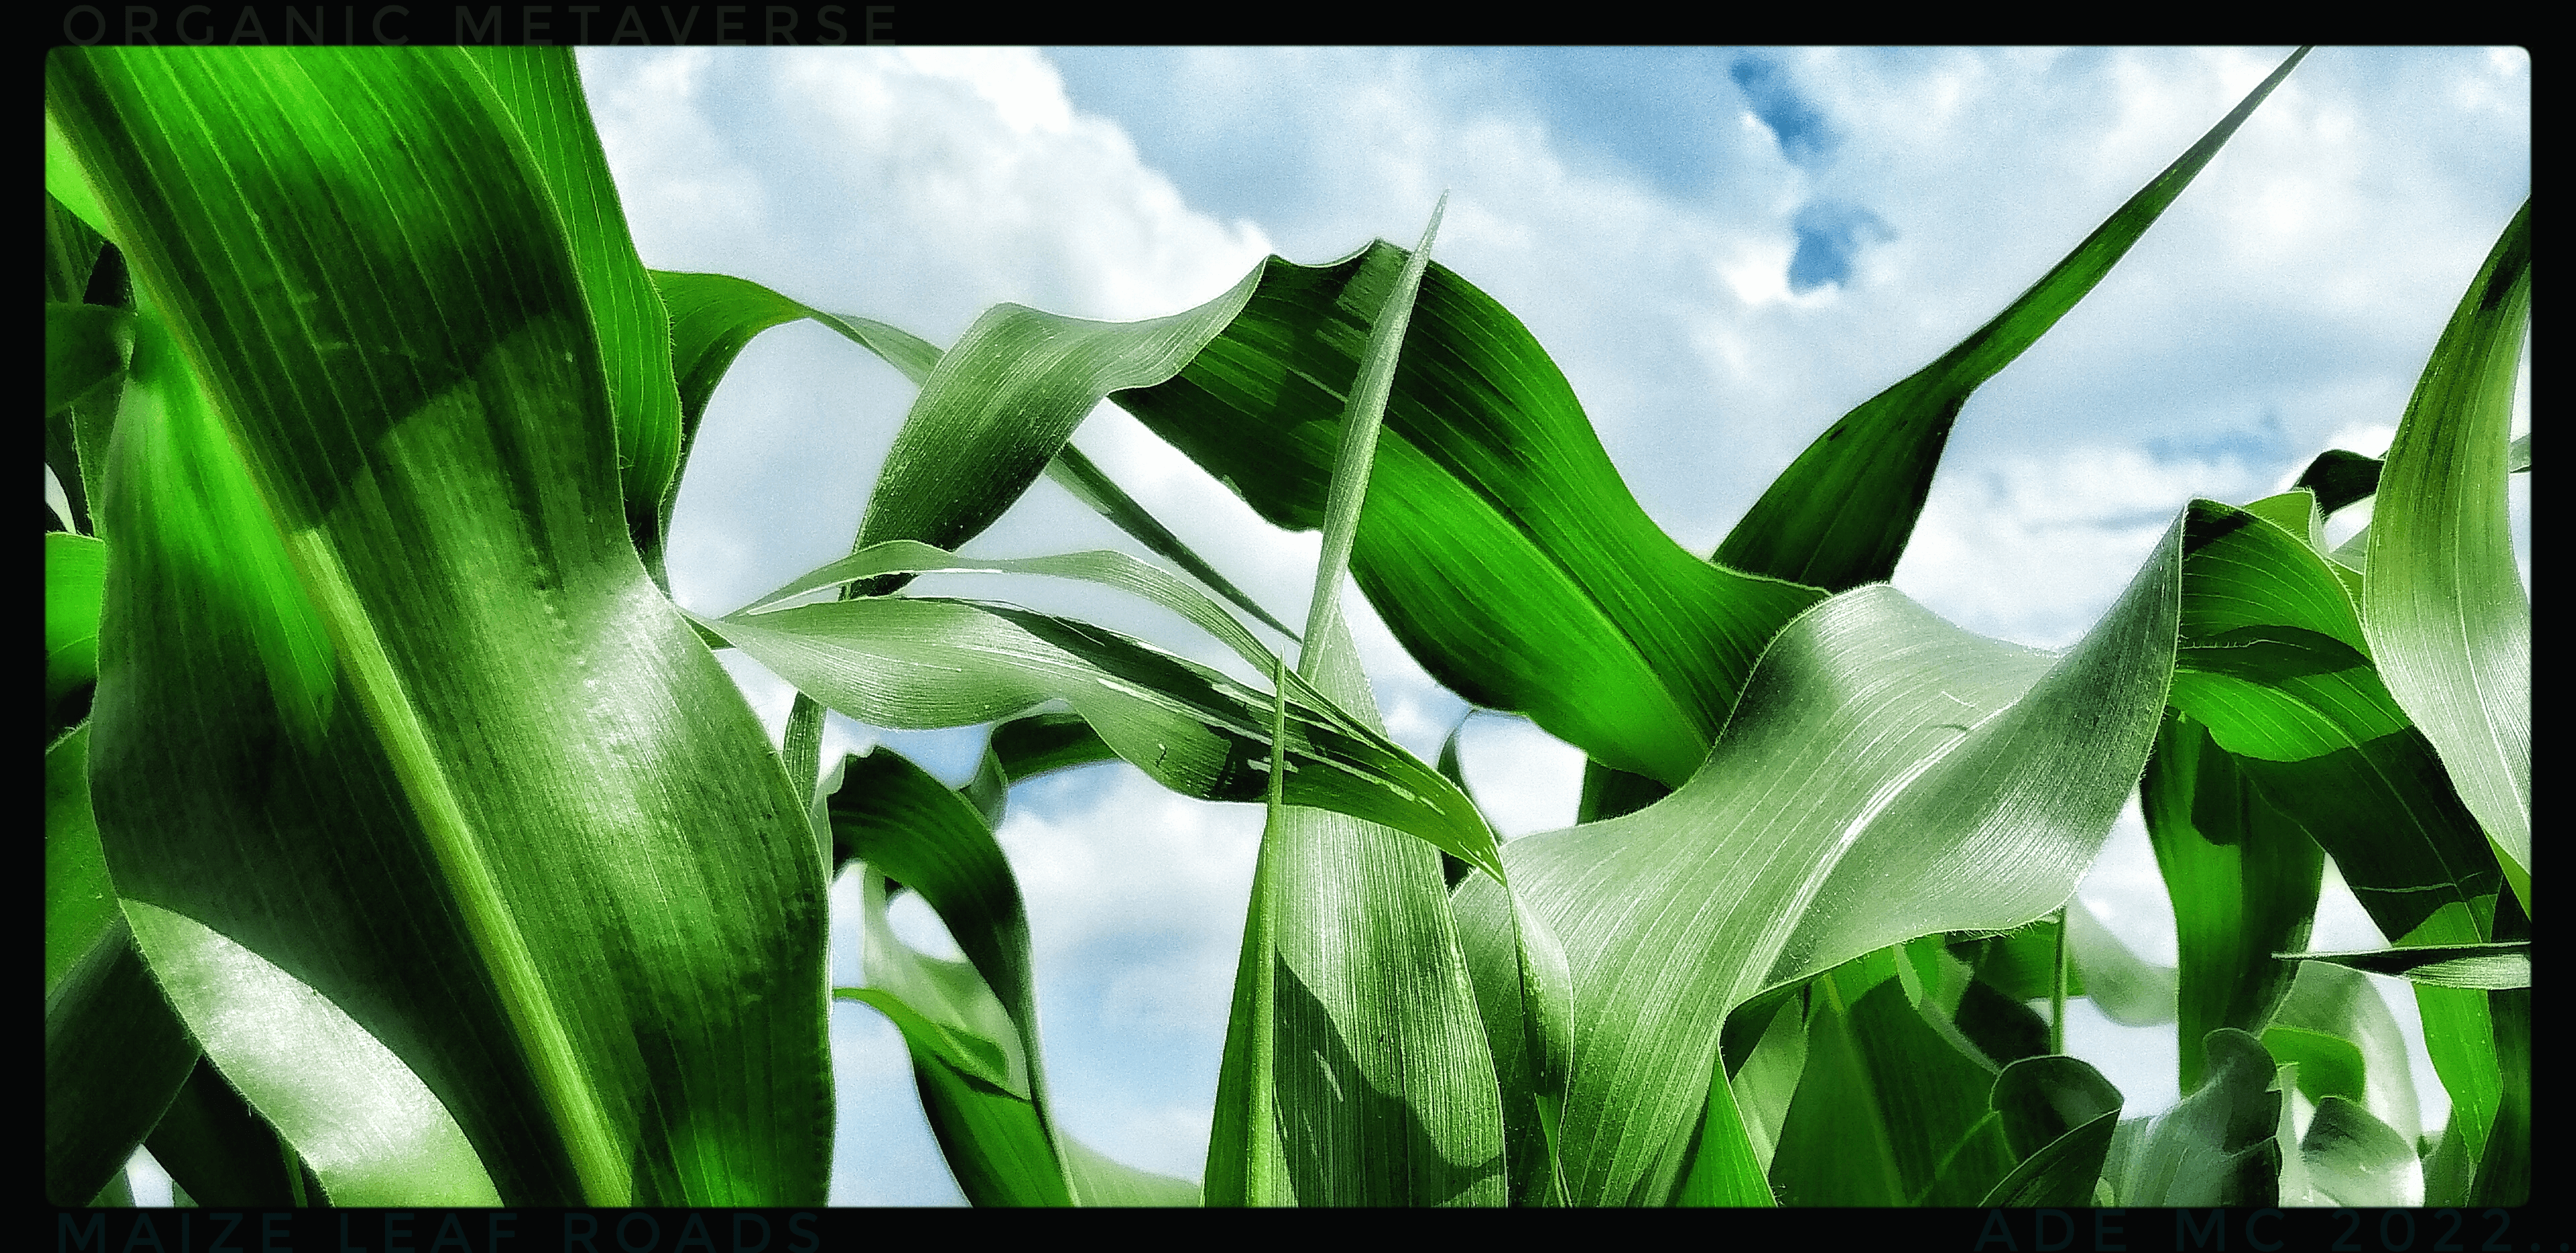 the maize leaf roads lie before you (1a)